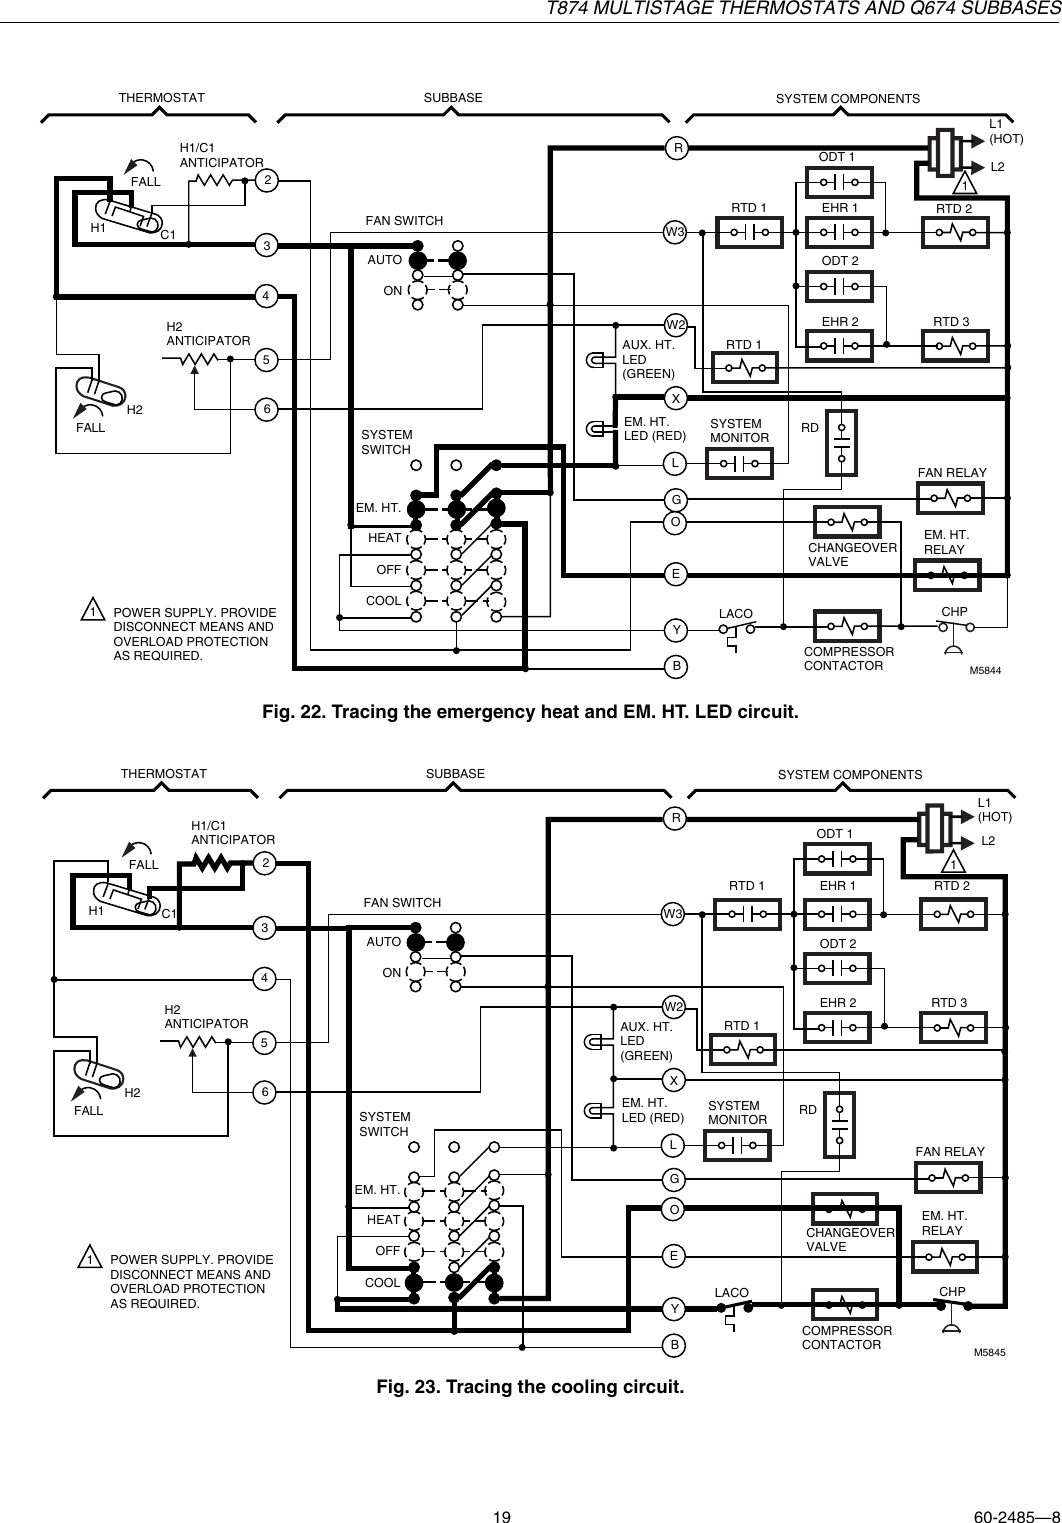 Bryant Heat Pump Wiring Diagram 213R from usermanual.wiki